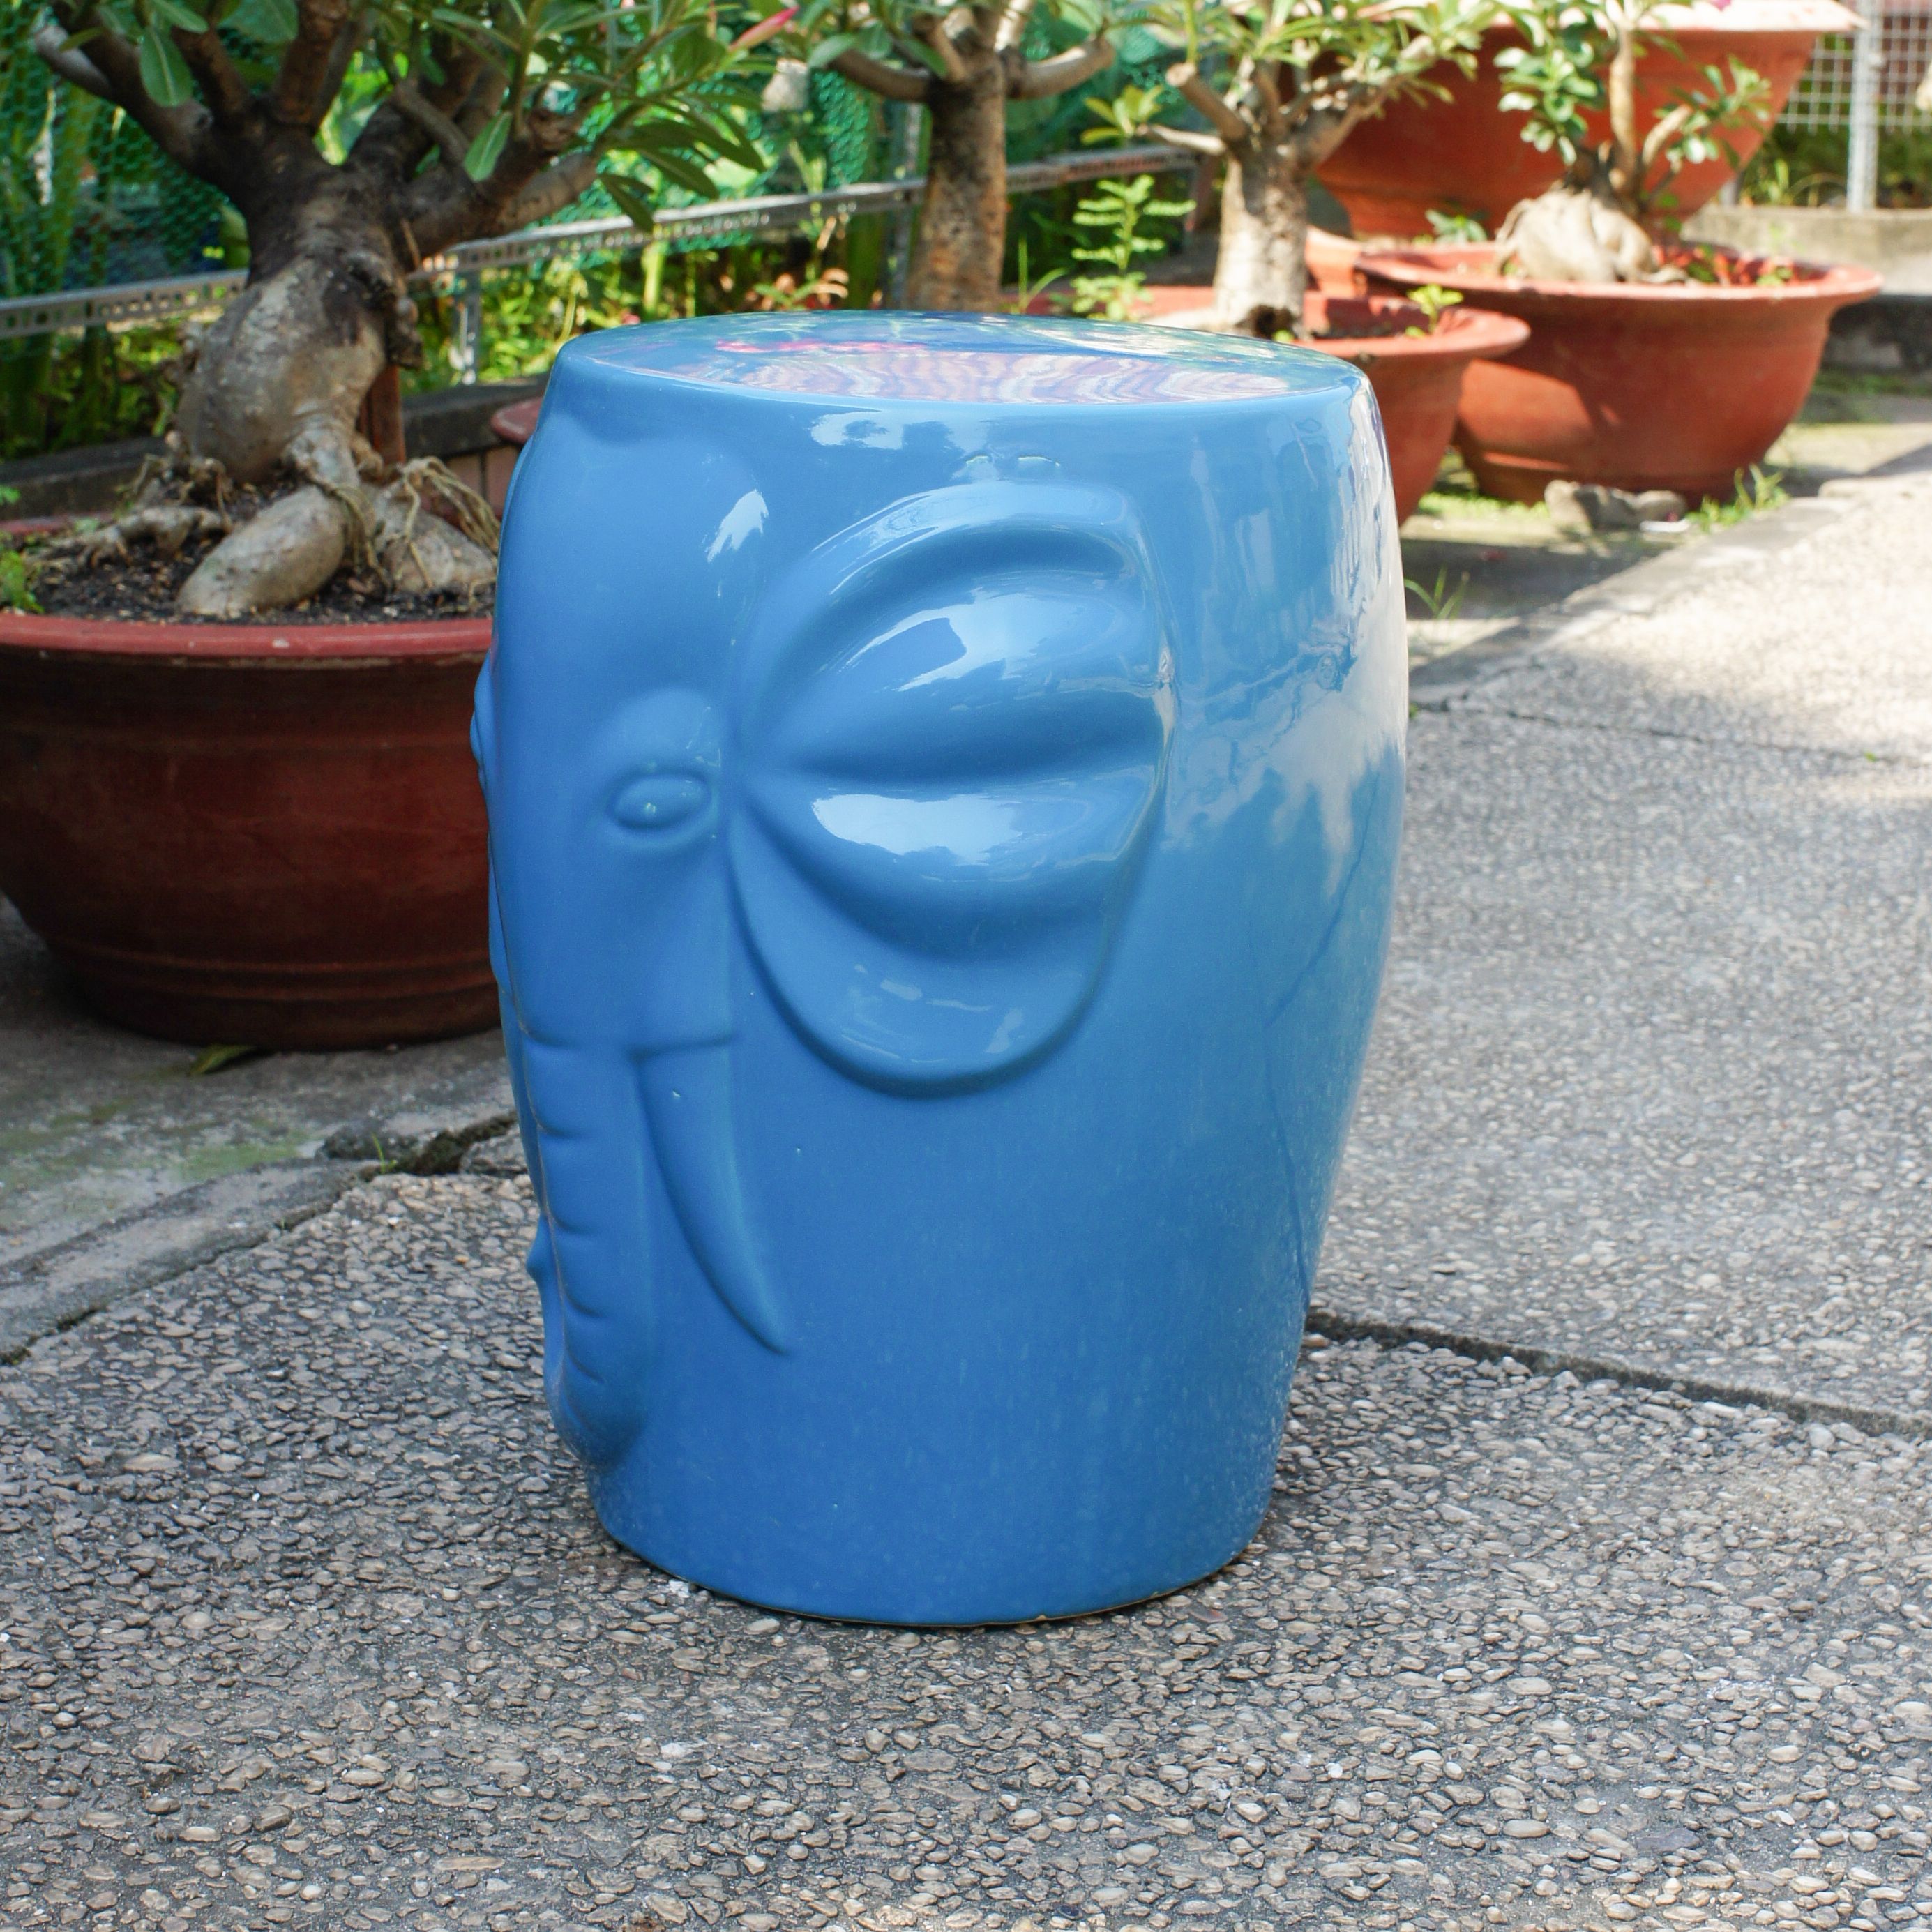 International Caravan Wild Elephant Drum Ceramic Garden Stool - image 2 of 2